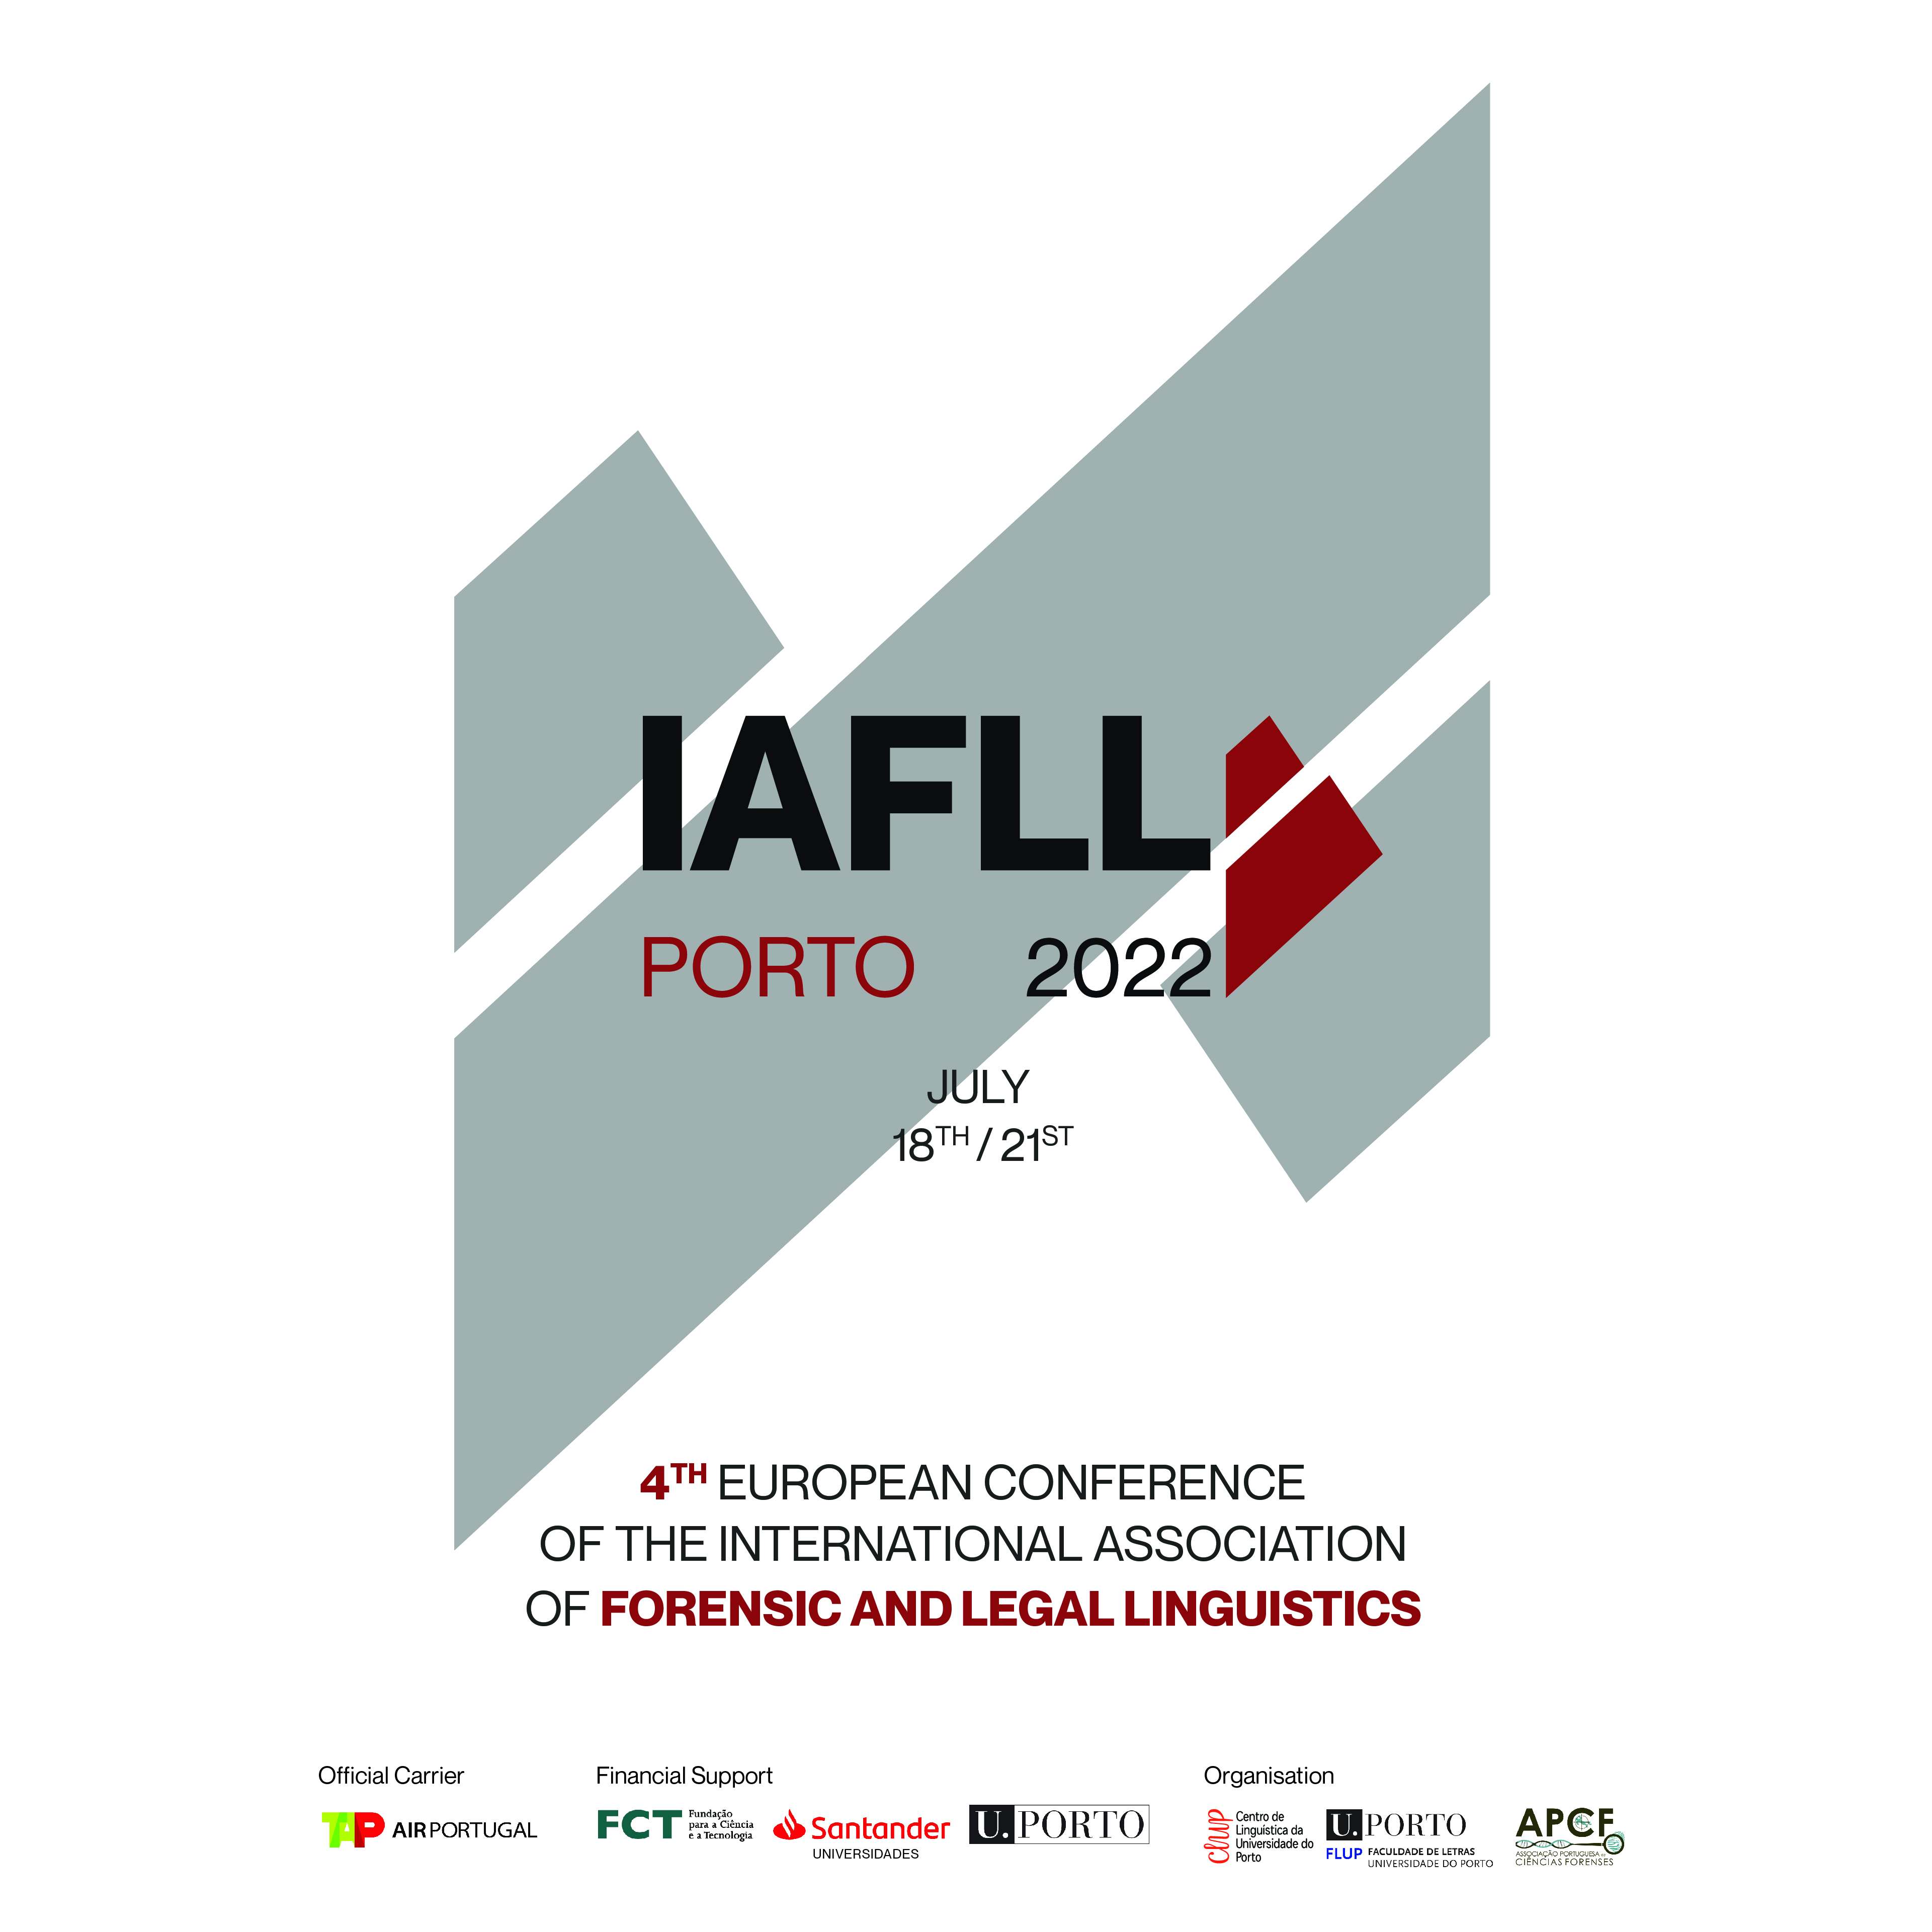 IAFLL Porto 2022